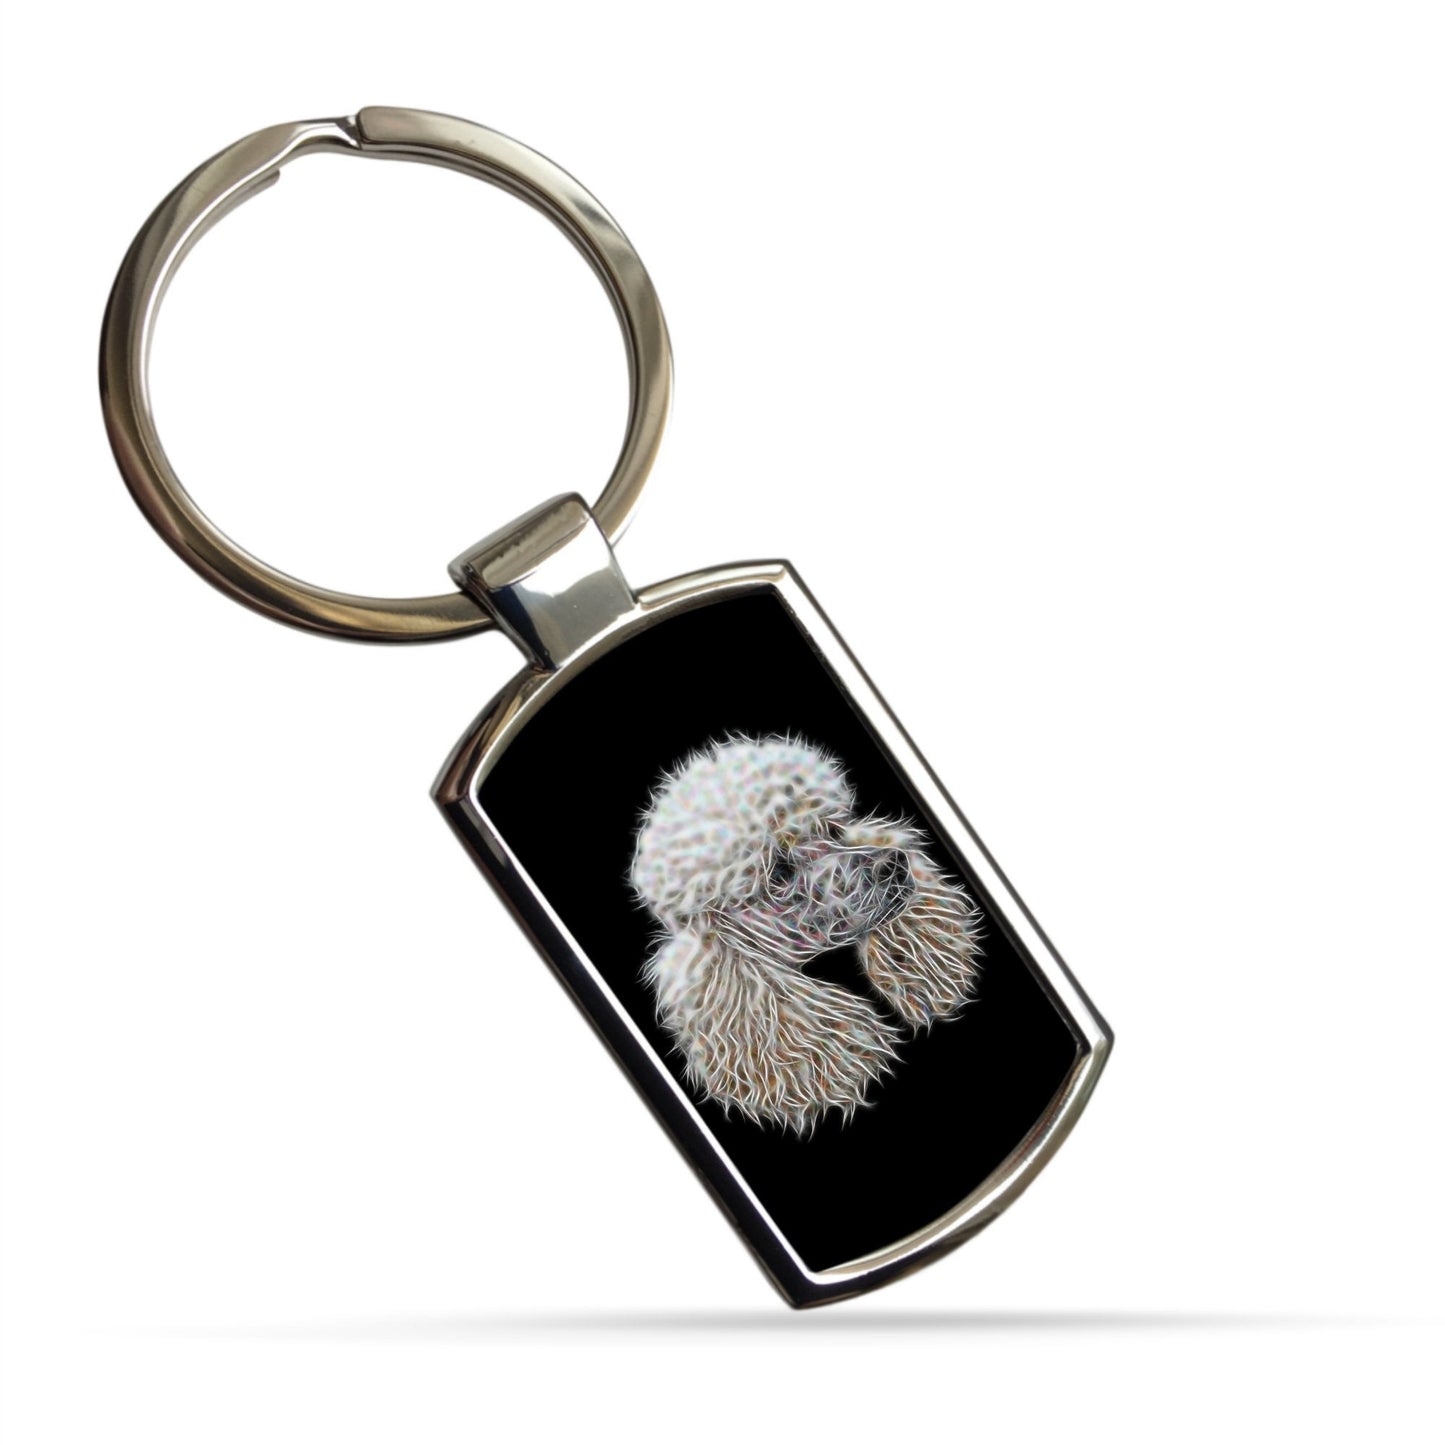 White Standard Poodle Keychain with Fractal Art Design.